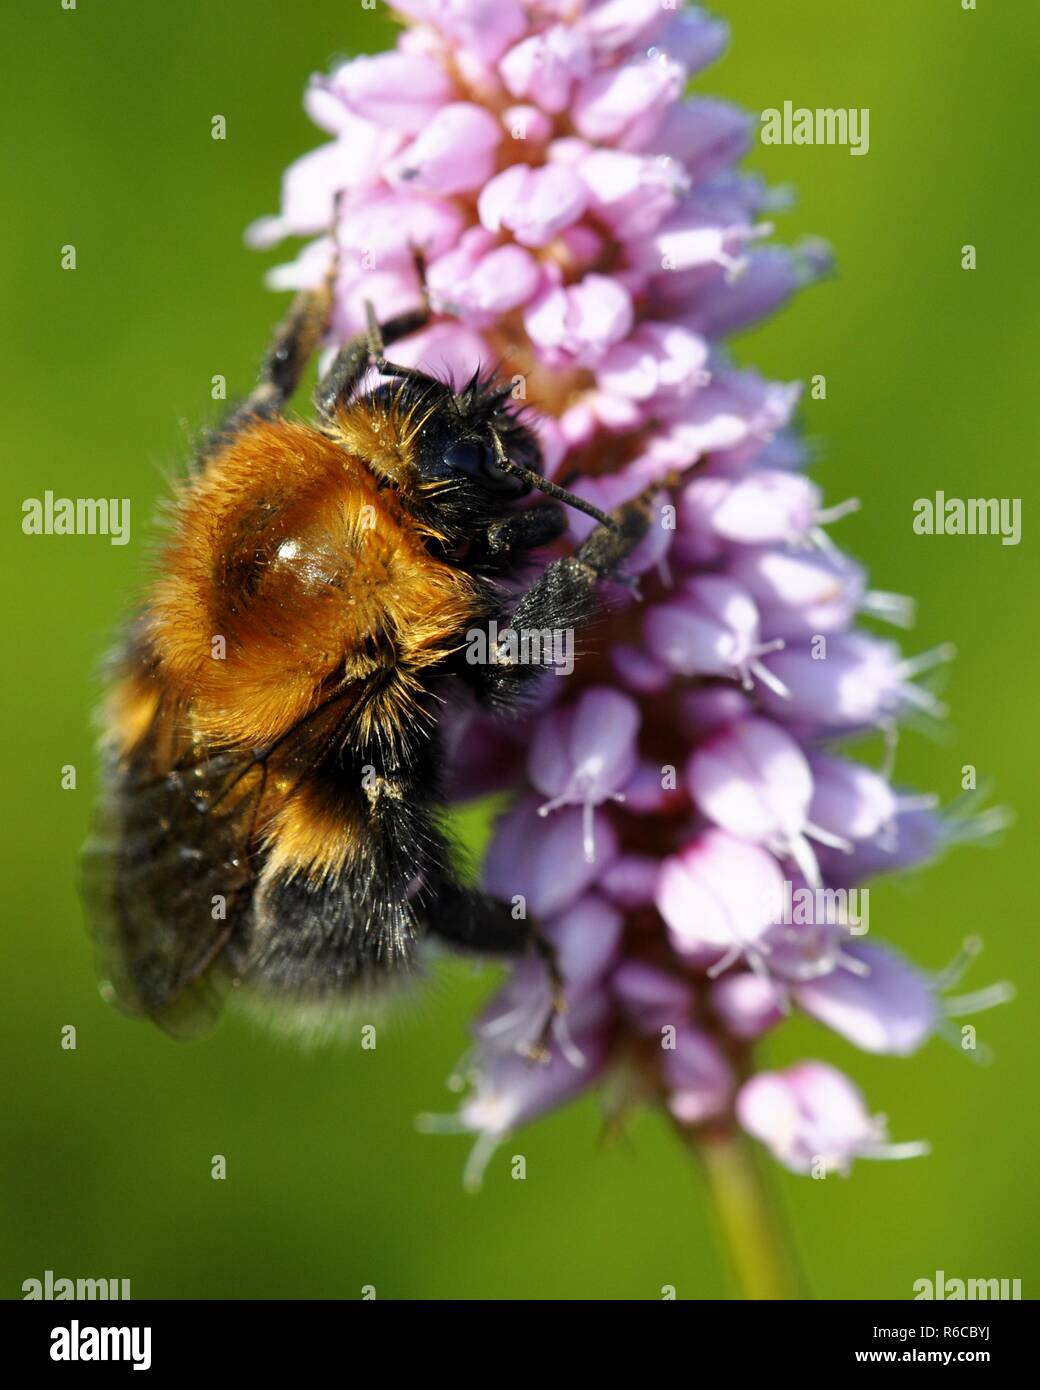 Wet bumblebee on purple flower Stock Photo